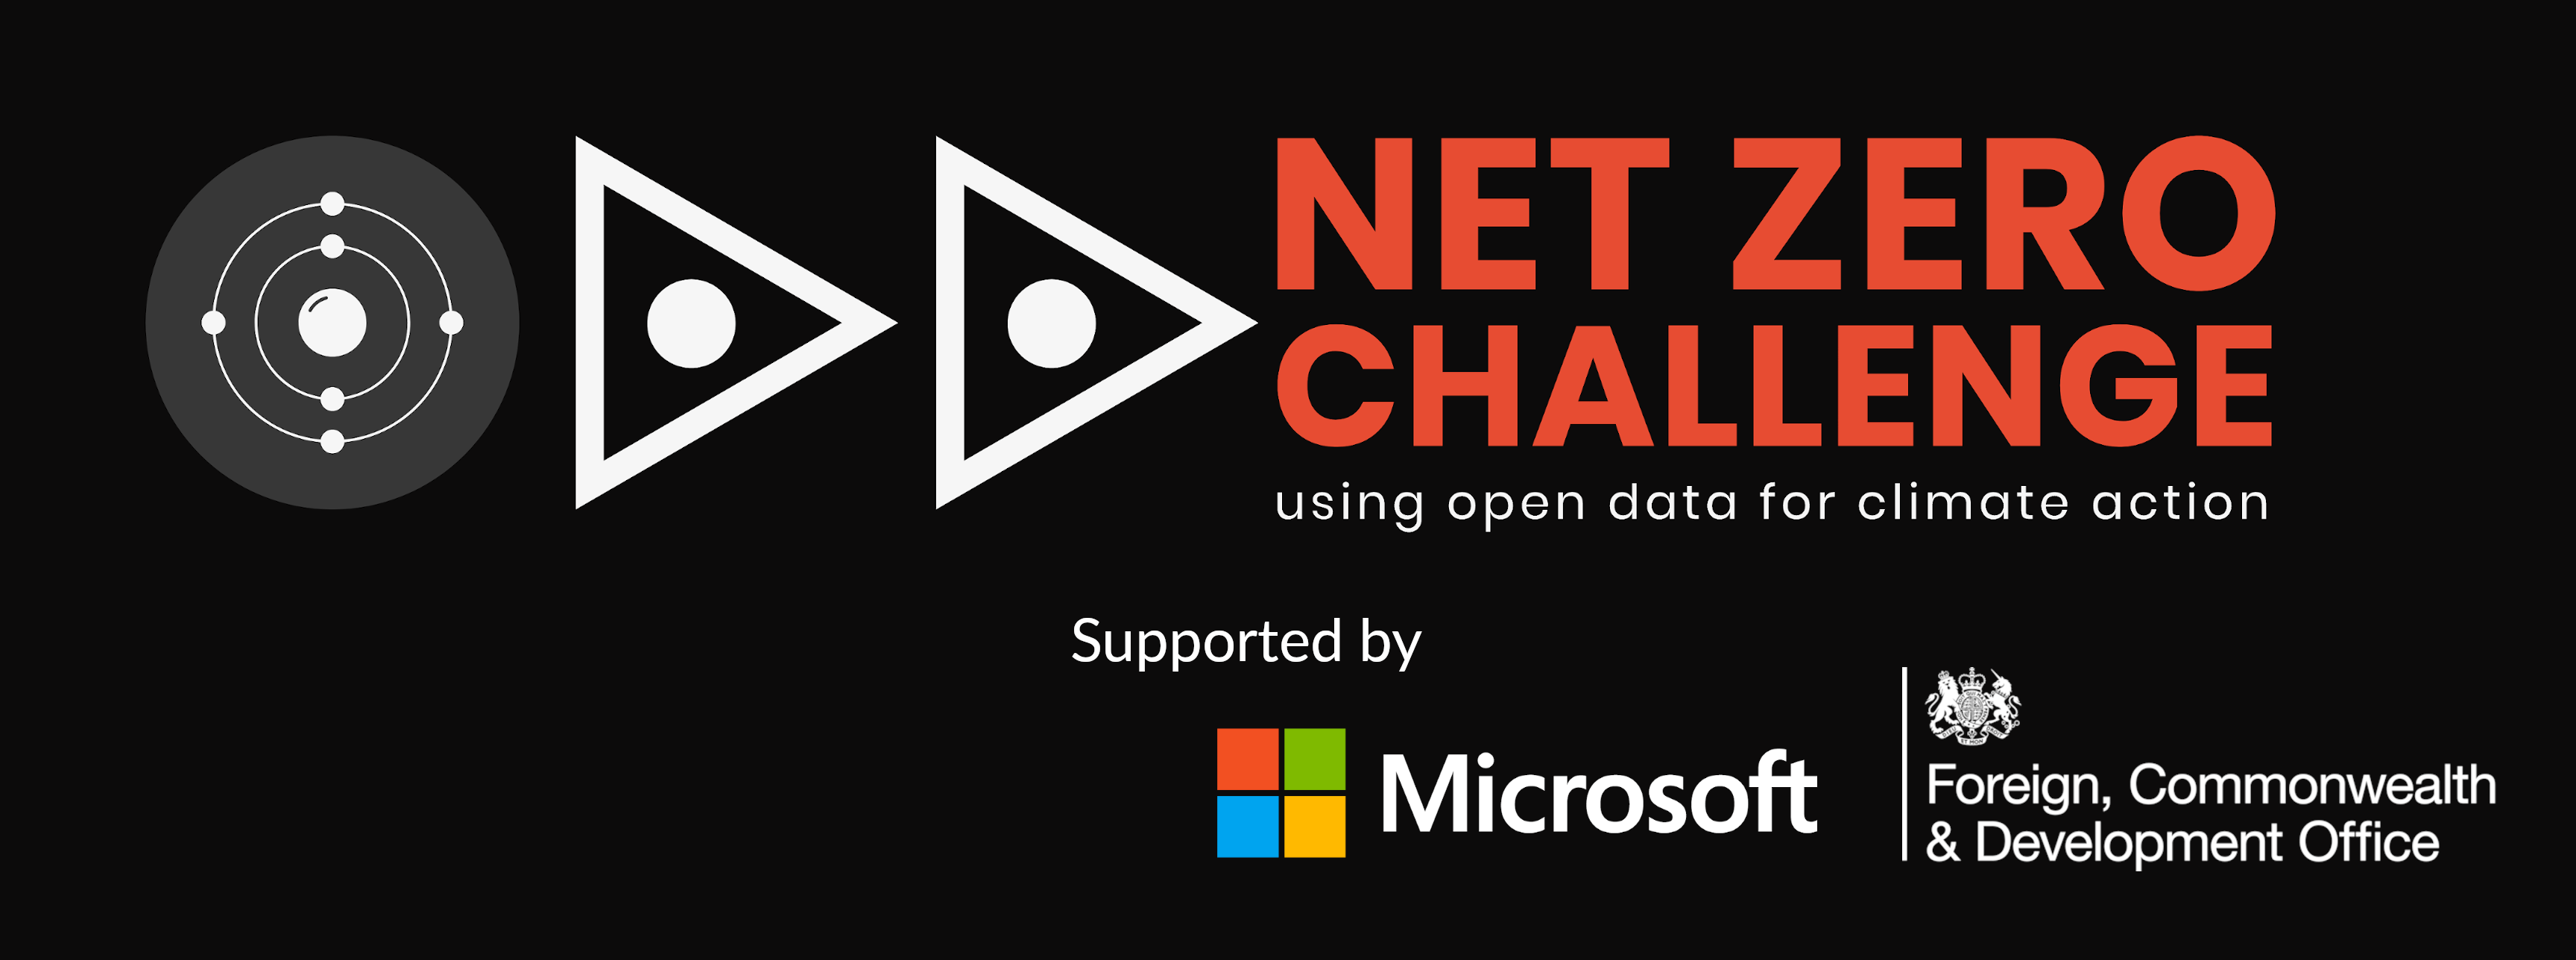 Net Zero Challenge logo